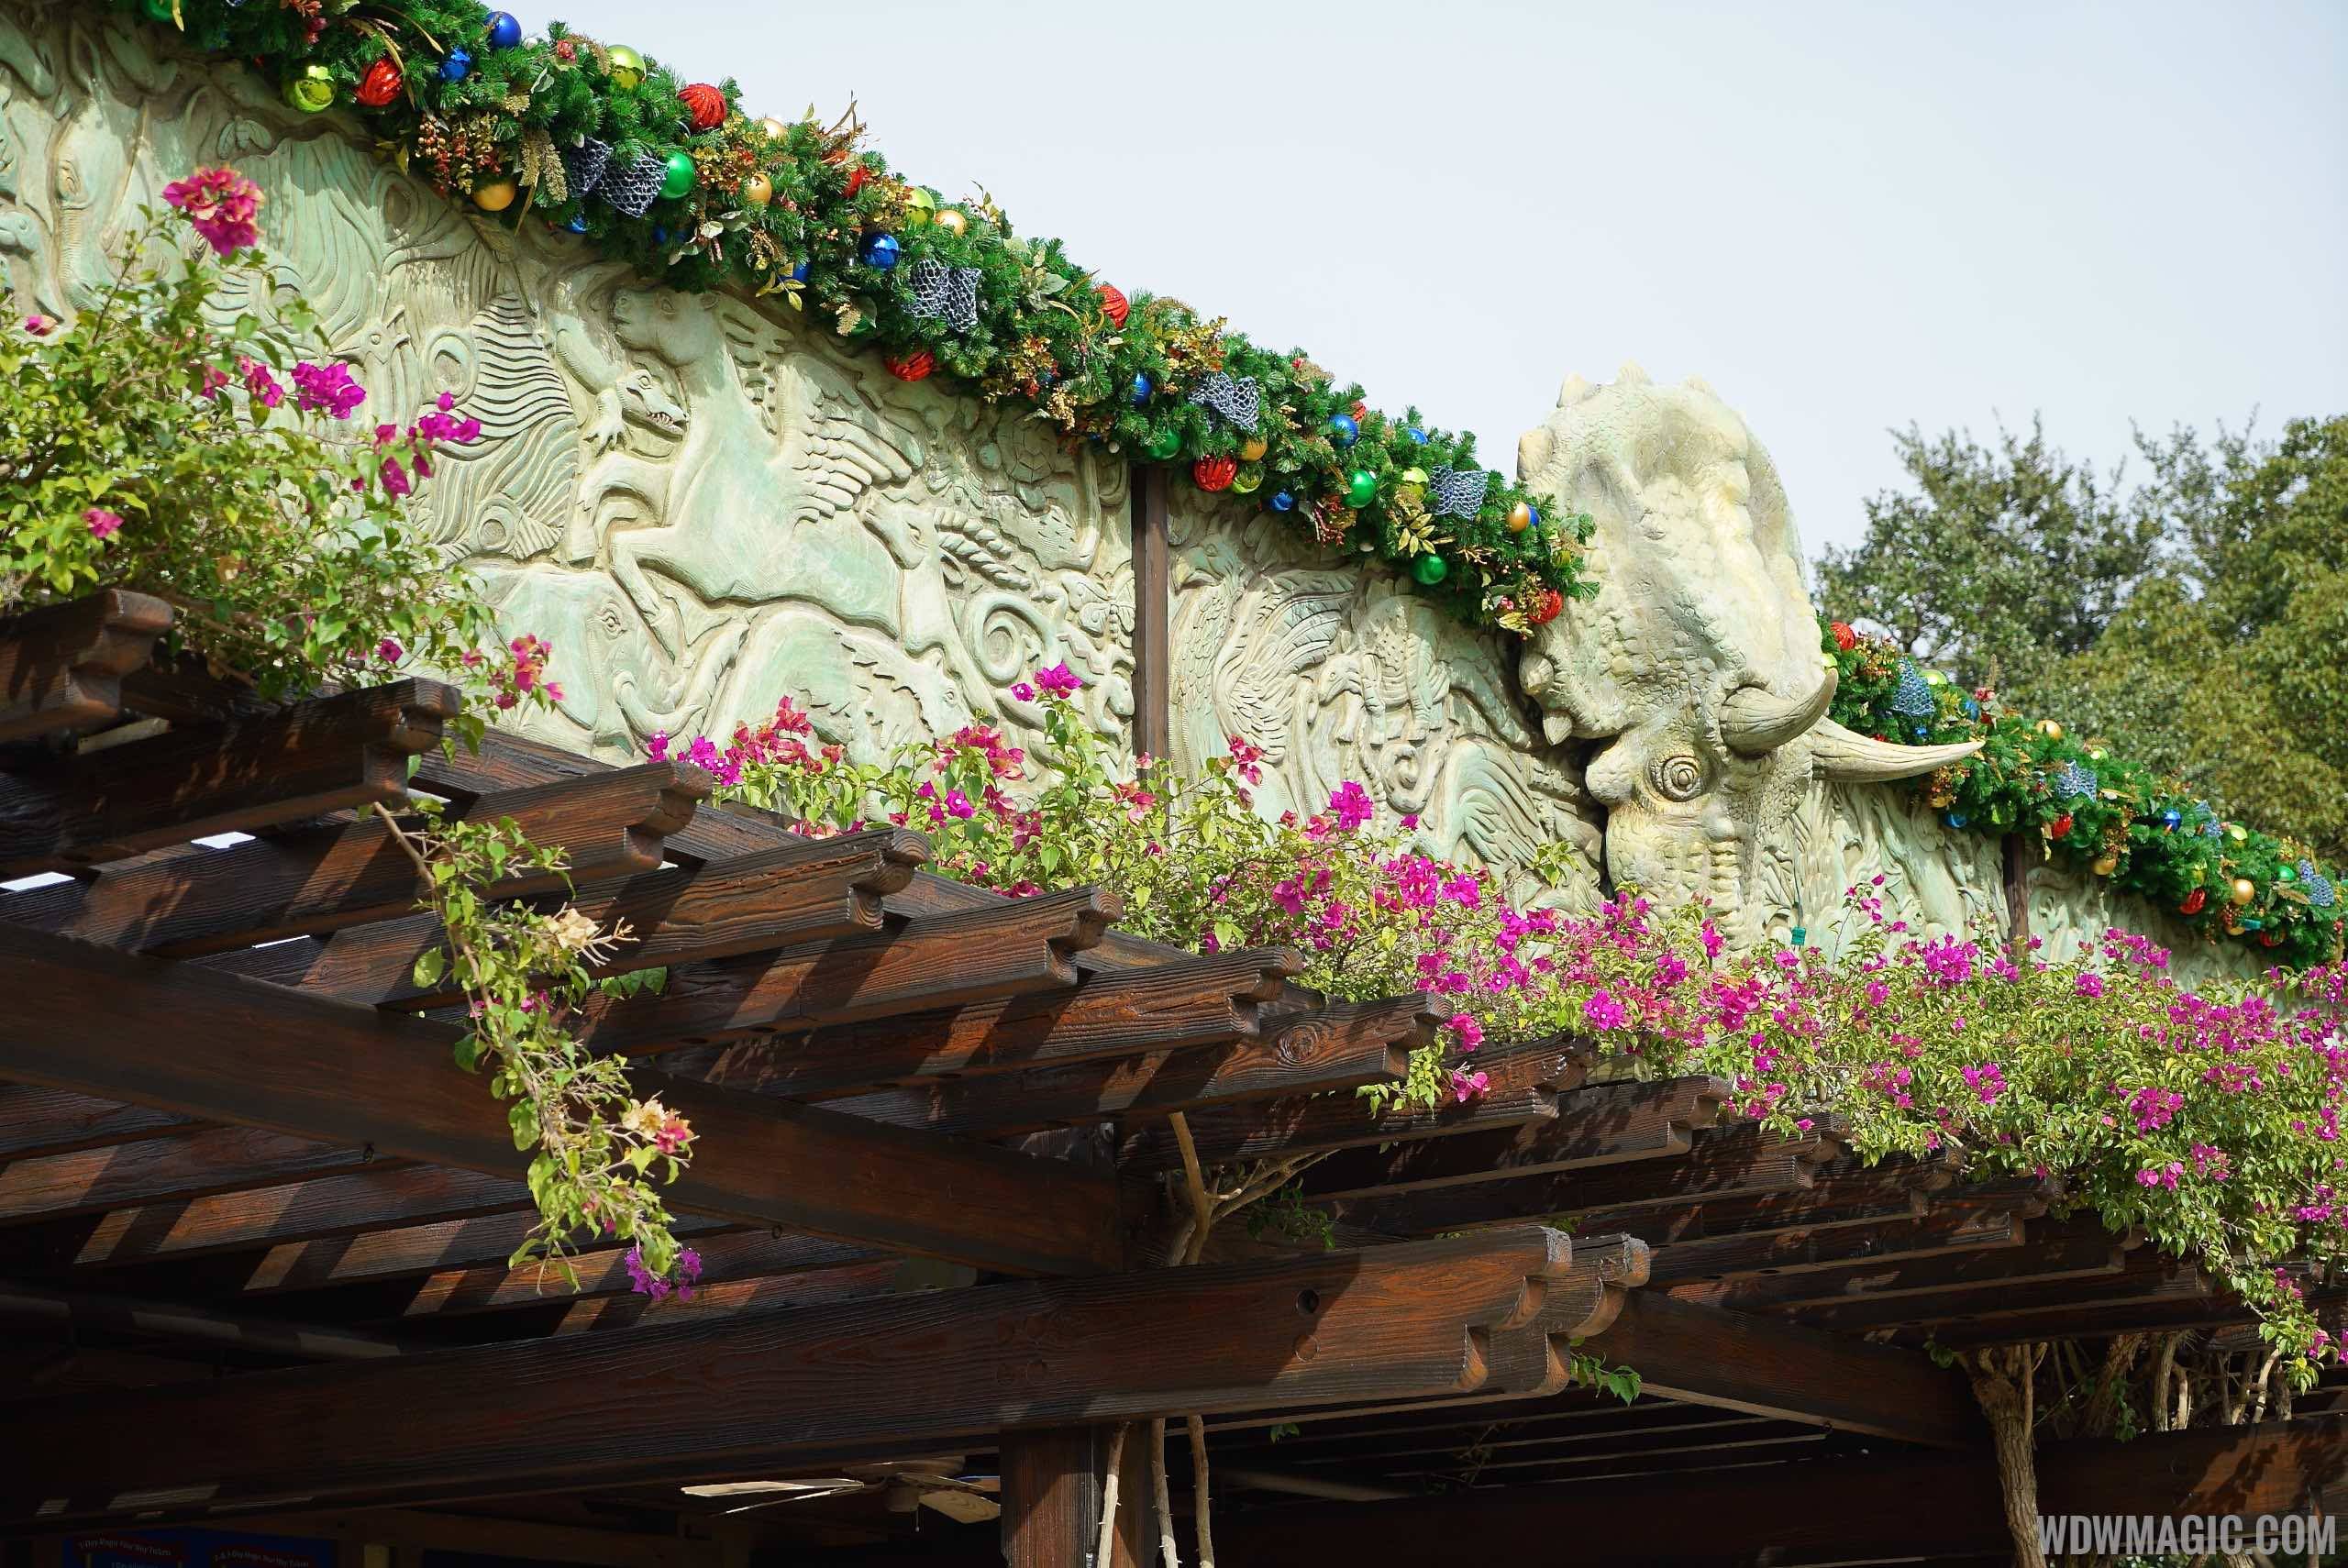 PHOTOS - Holiday decorations now up at Disney's Animal Kingdom